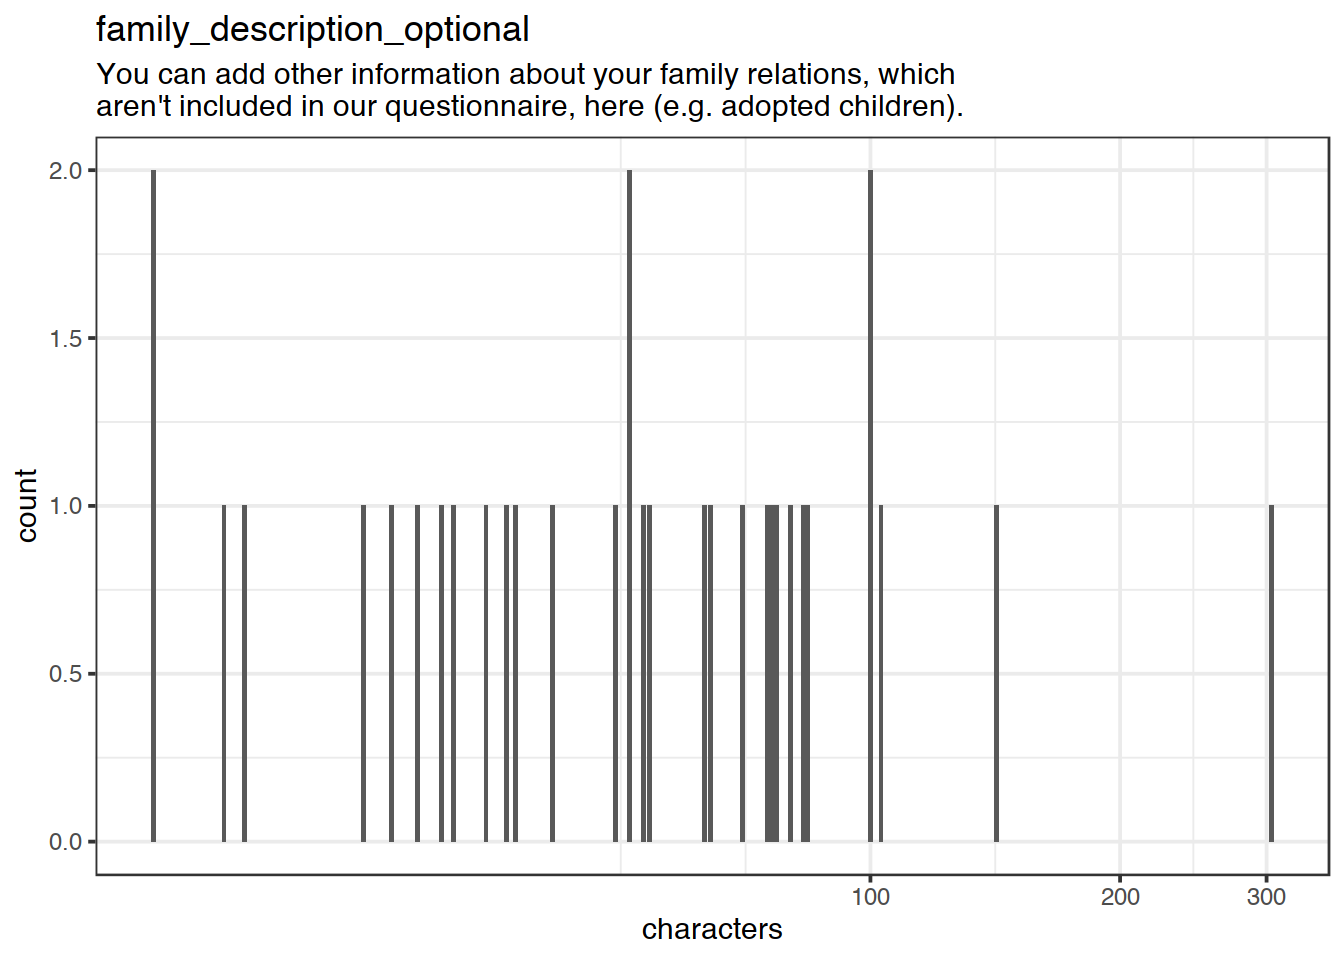 Distribution of values for family_description_optional